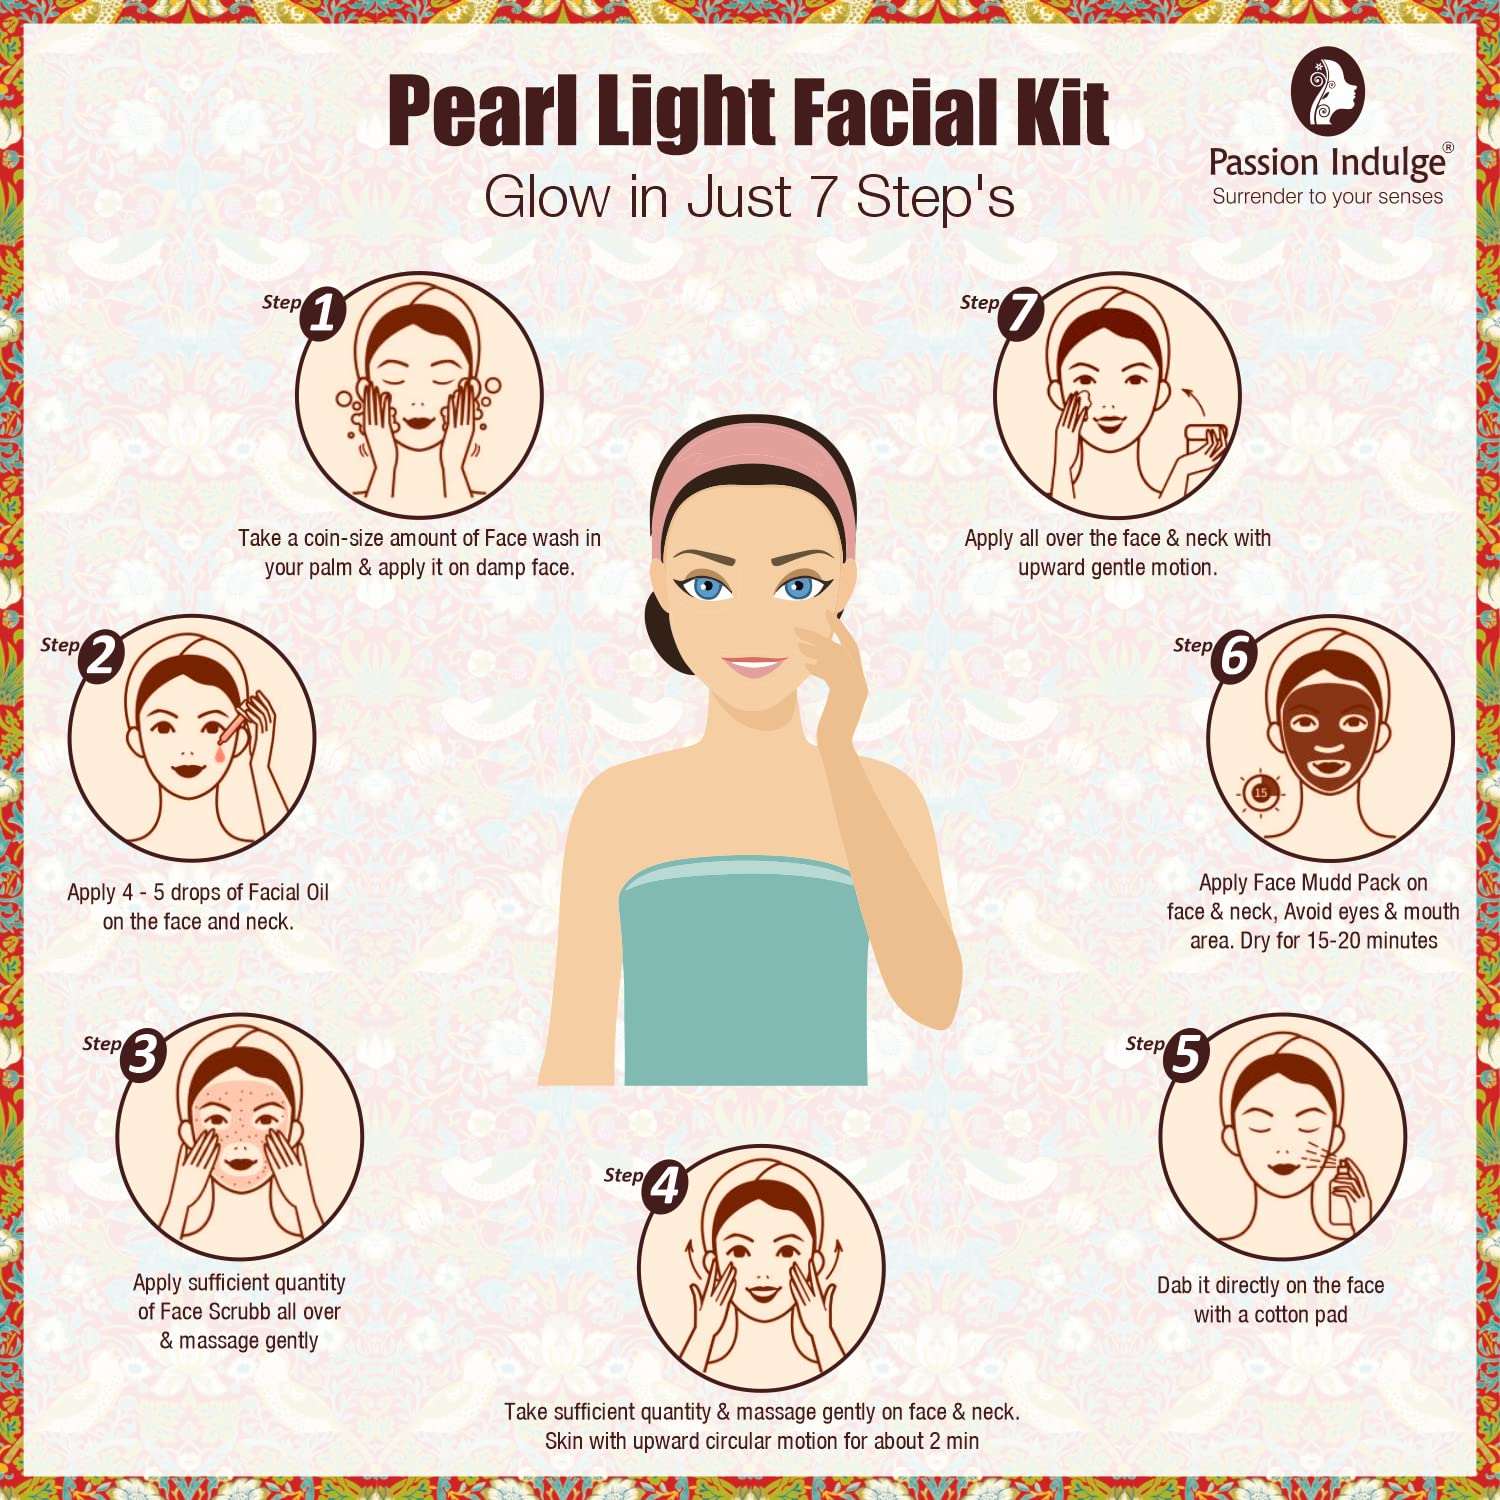 Pearl Light 7 Star Facial Kit For Glowing Skin | Skin Brightening| Spot Reduction | SPF 15 With Lemon & Chamomile | Home Facial Kit | Natural & Vegan